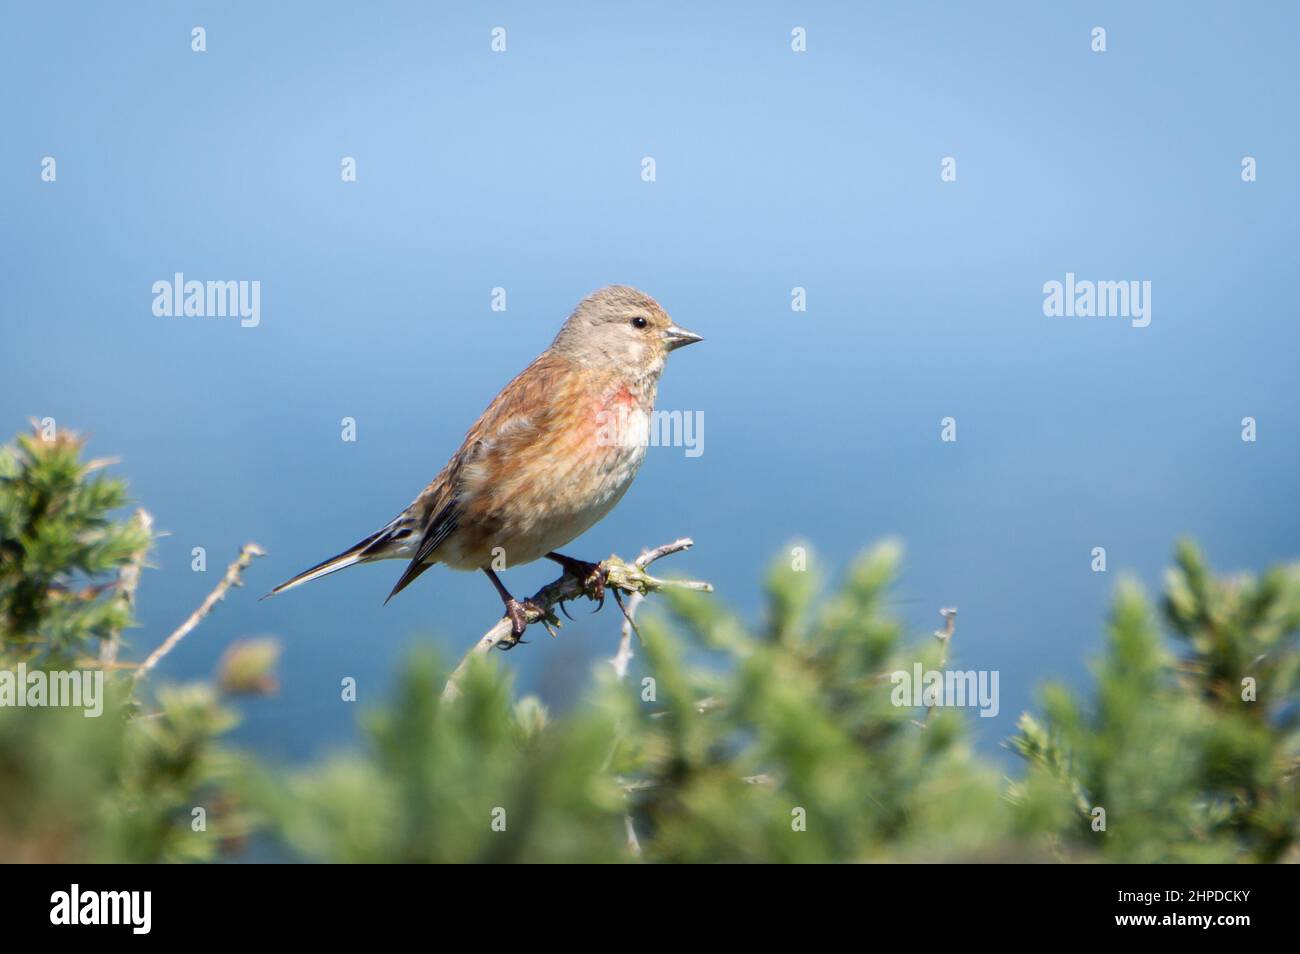 Linnet bird seen in profile Stock Photo